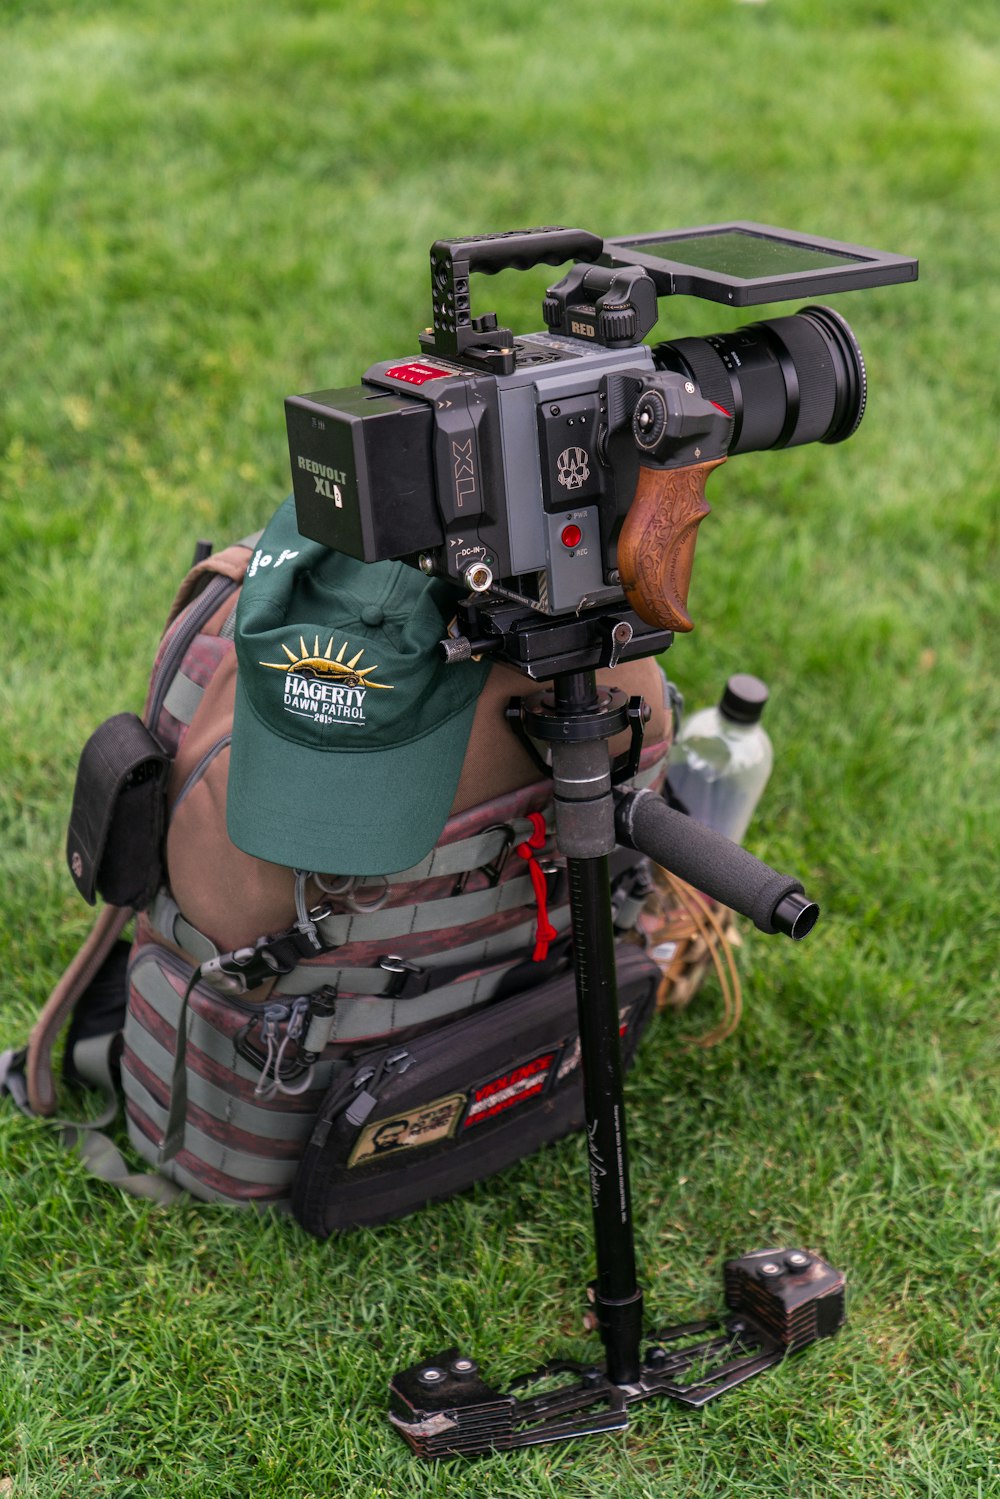 black professional camera besides brown backpack